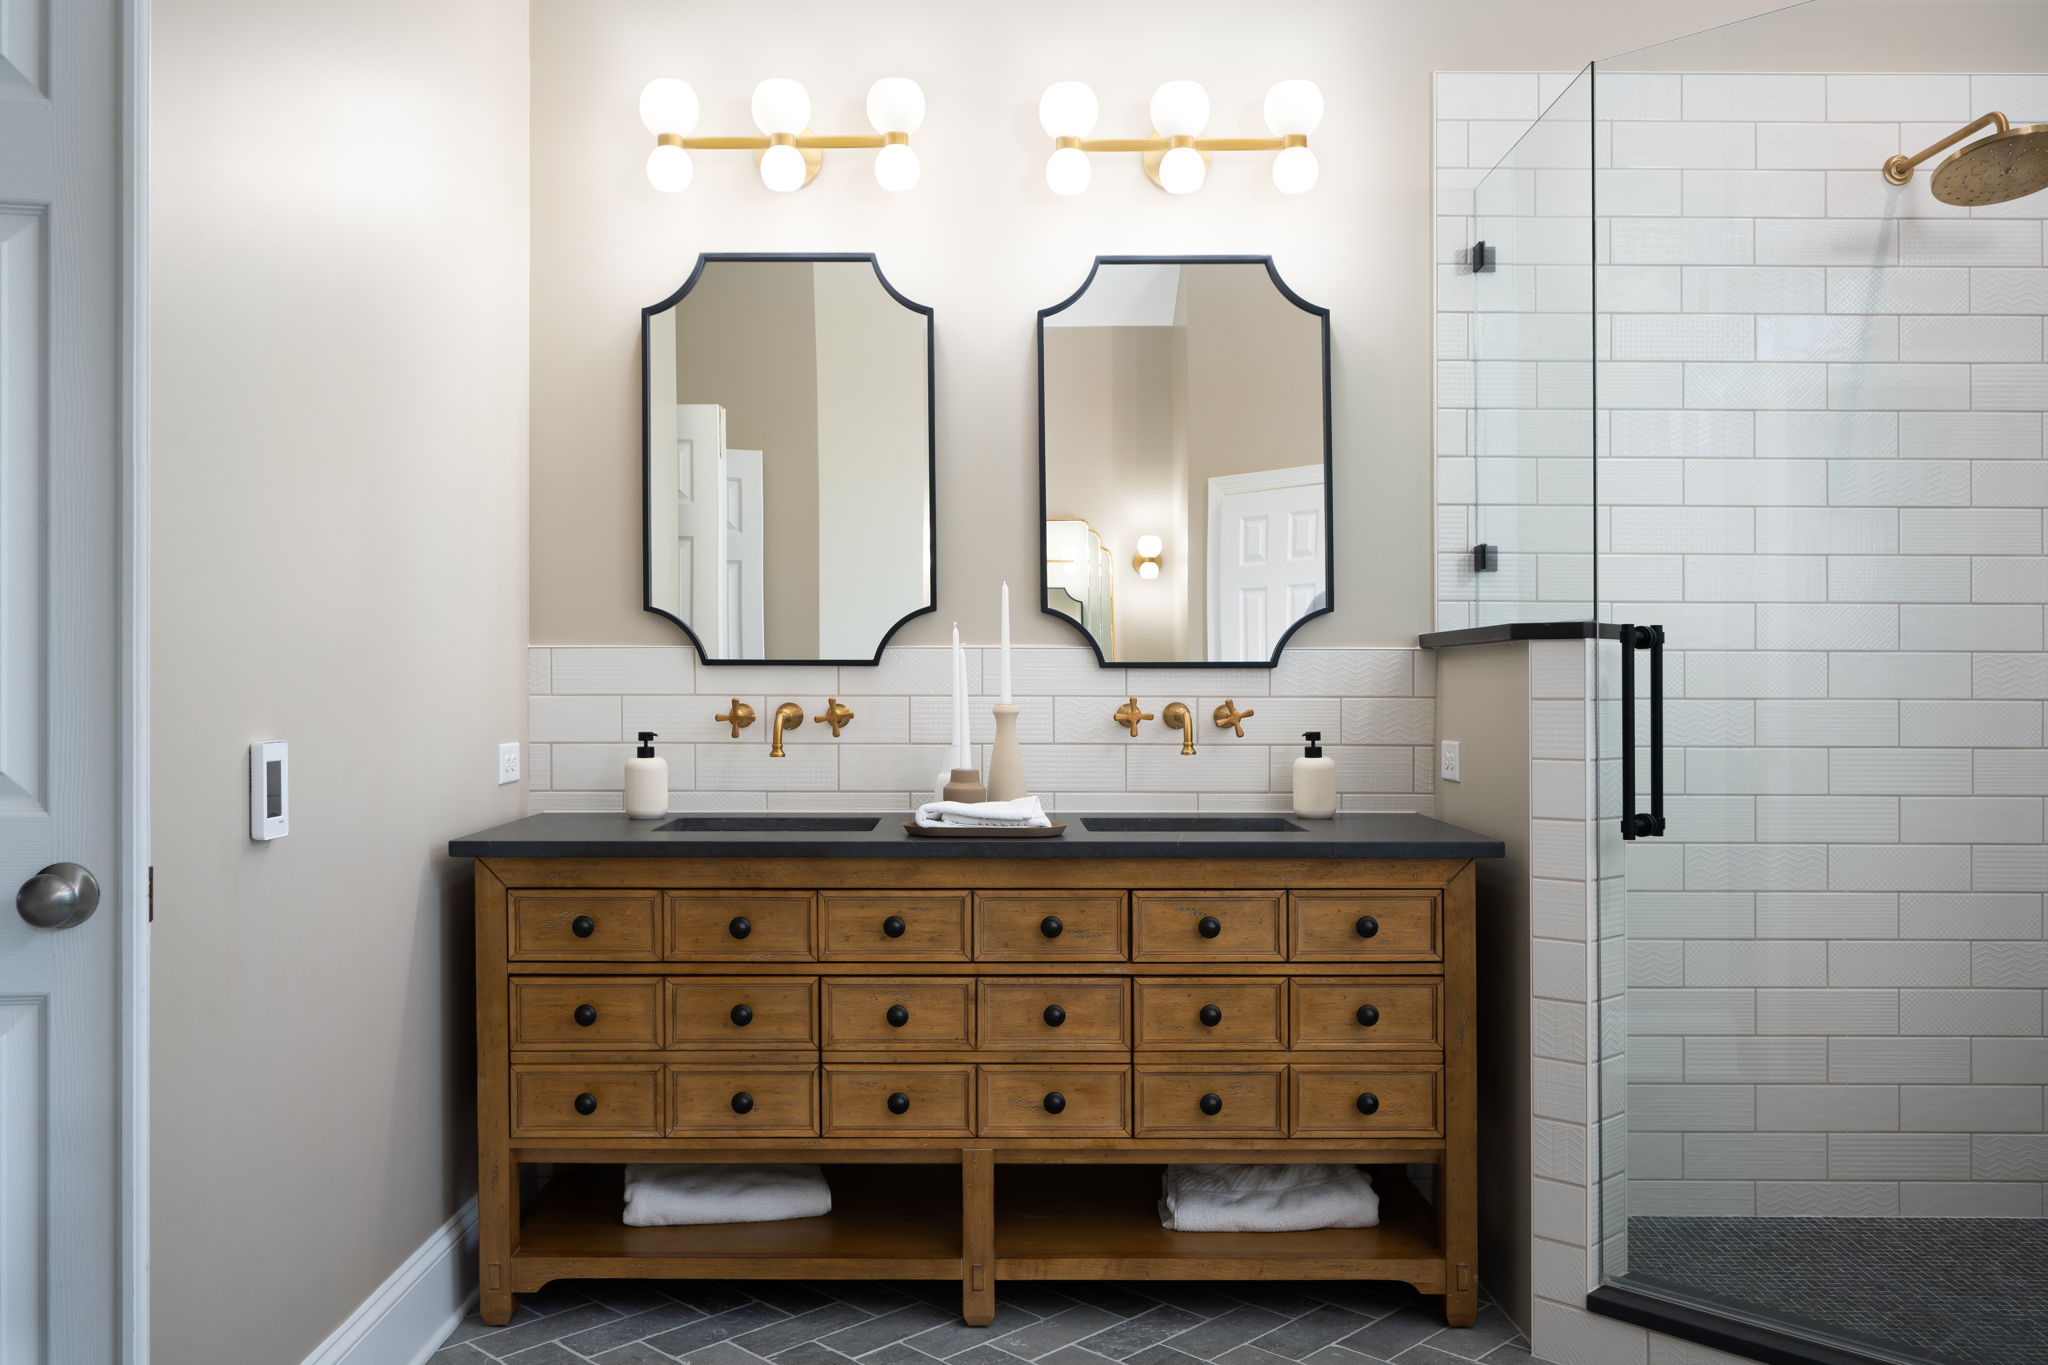 master bathroom storage solutions include furniture-like vanities.